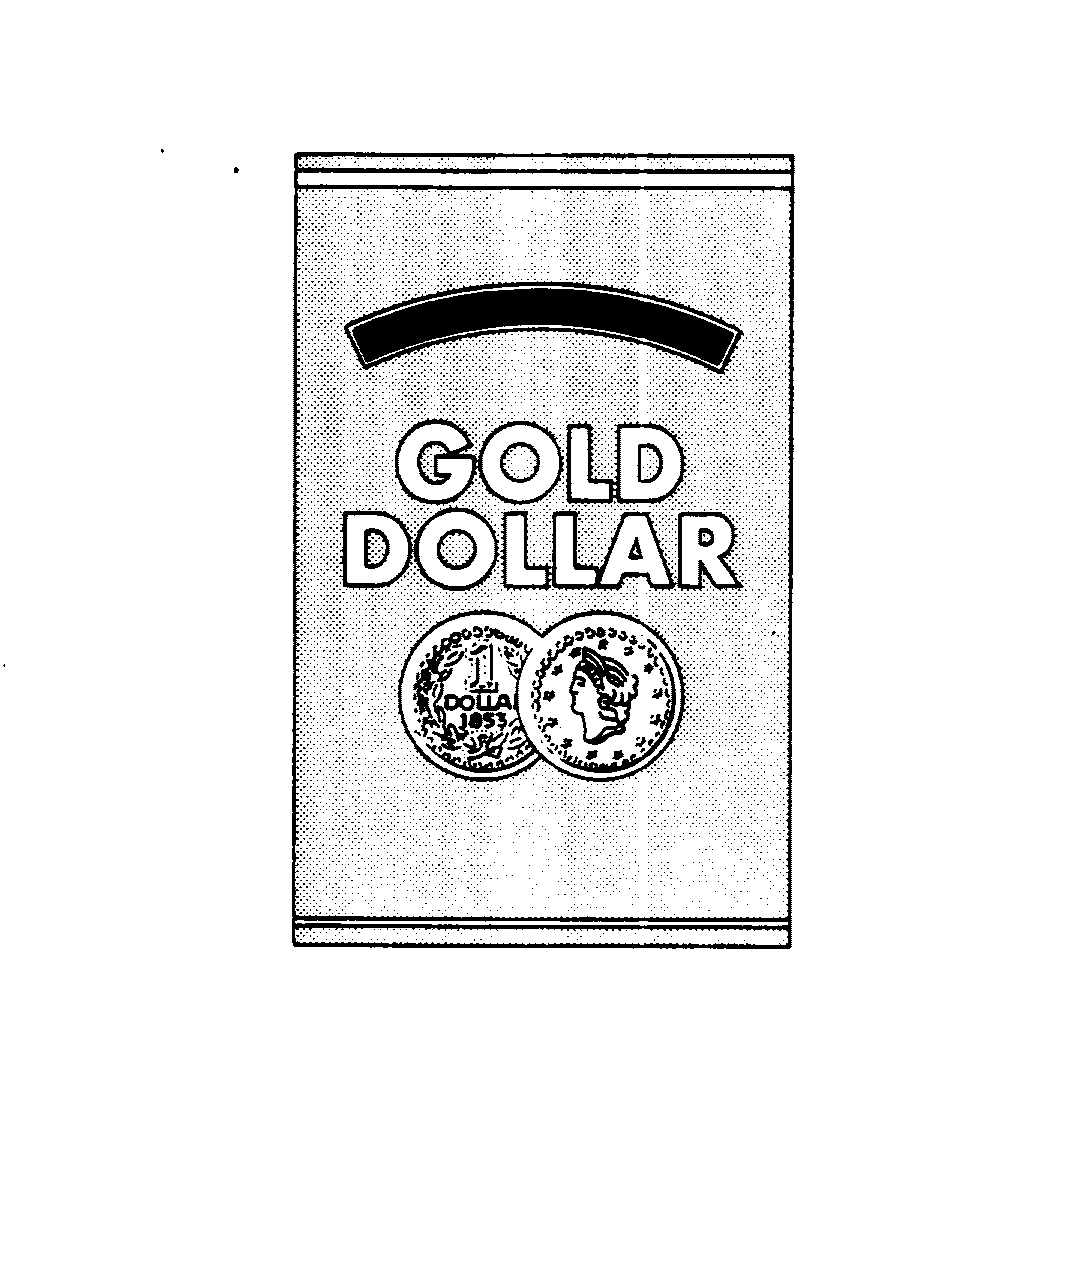  GOLD DOLLAR